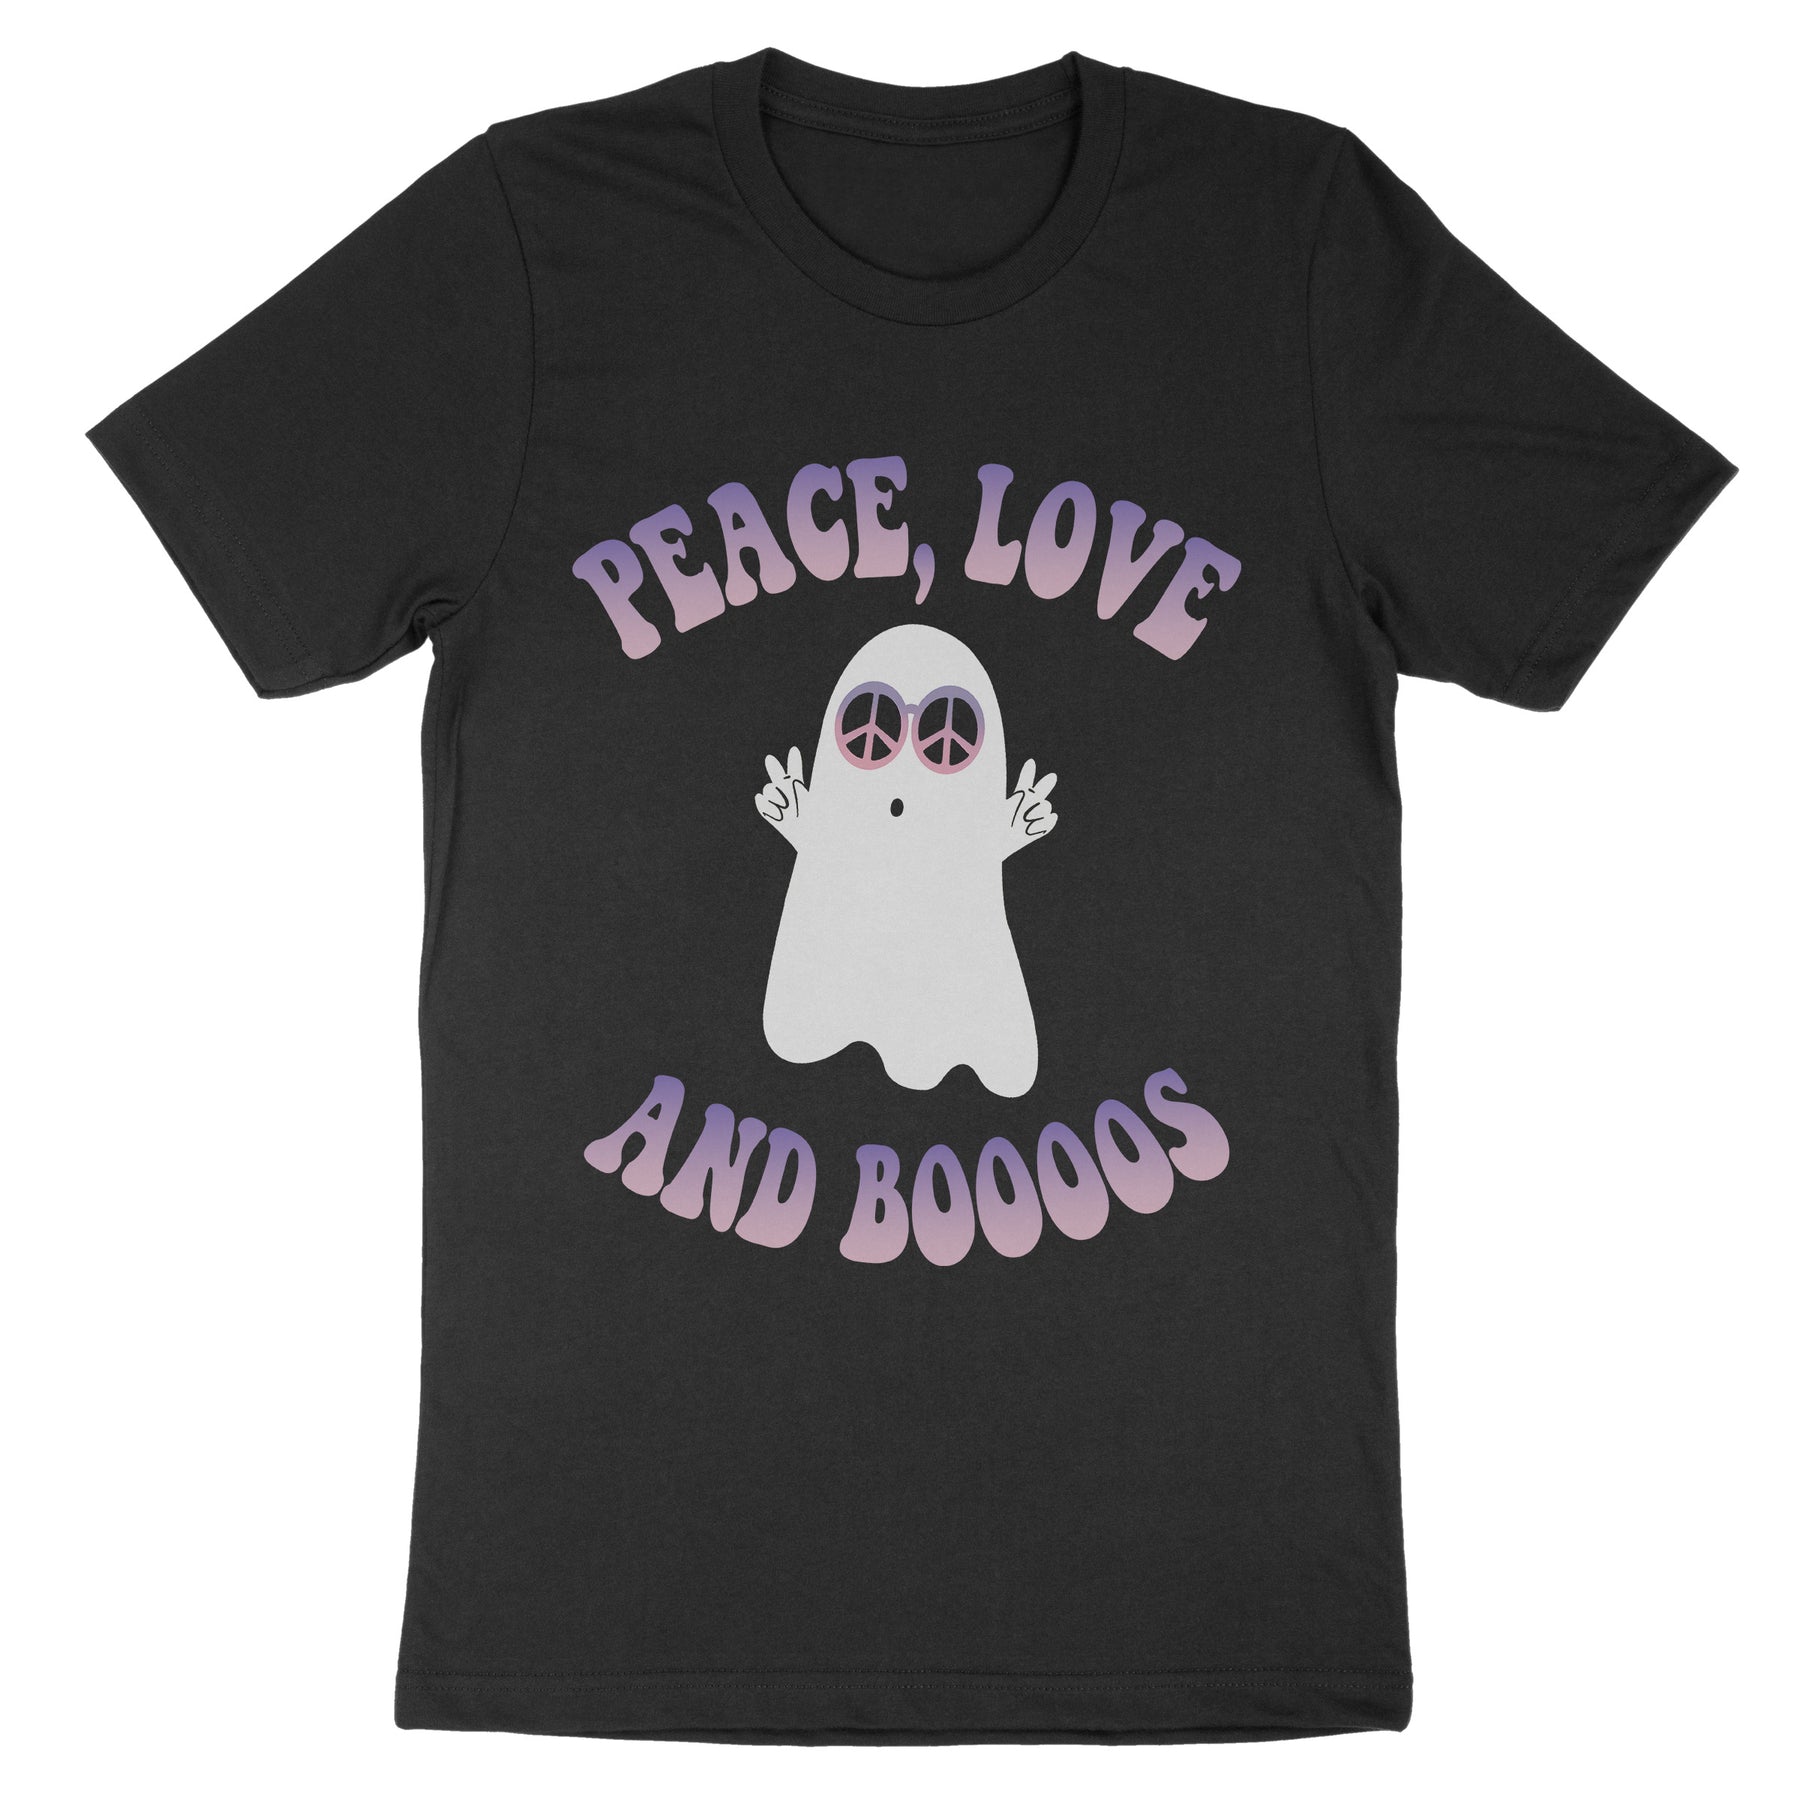 Peace Love and Boos Tee